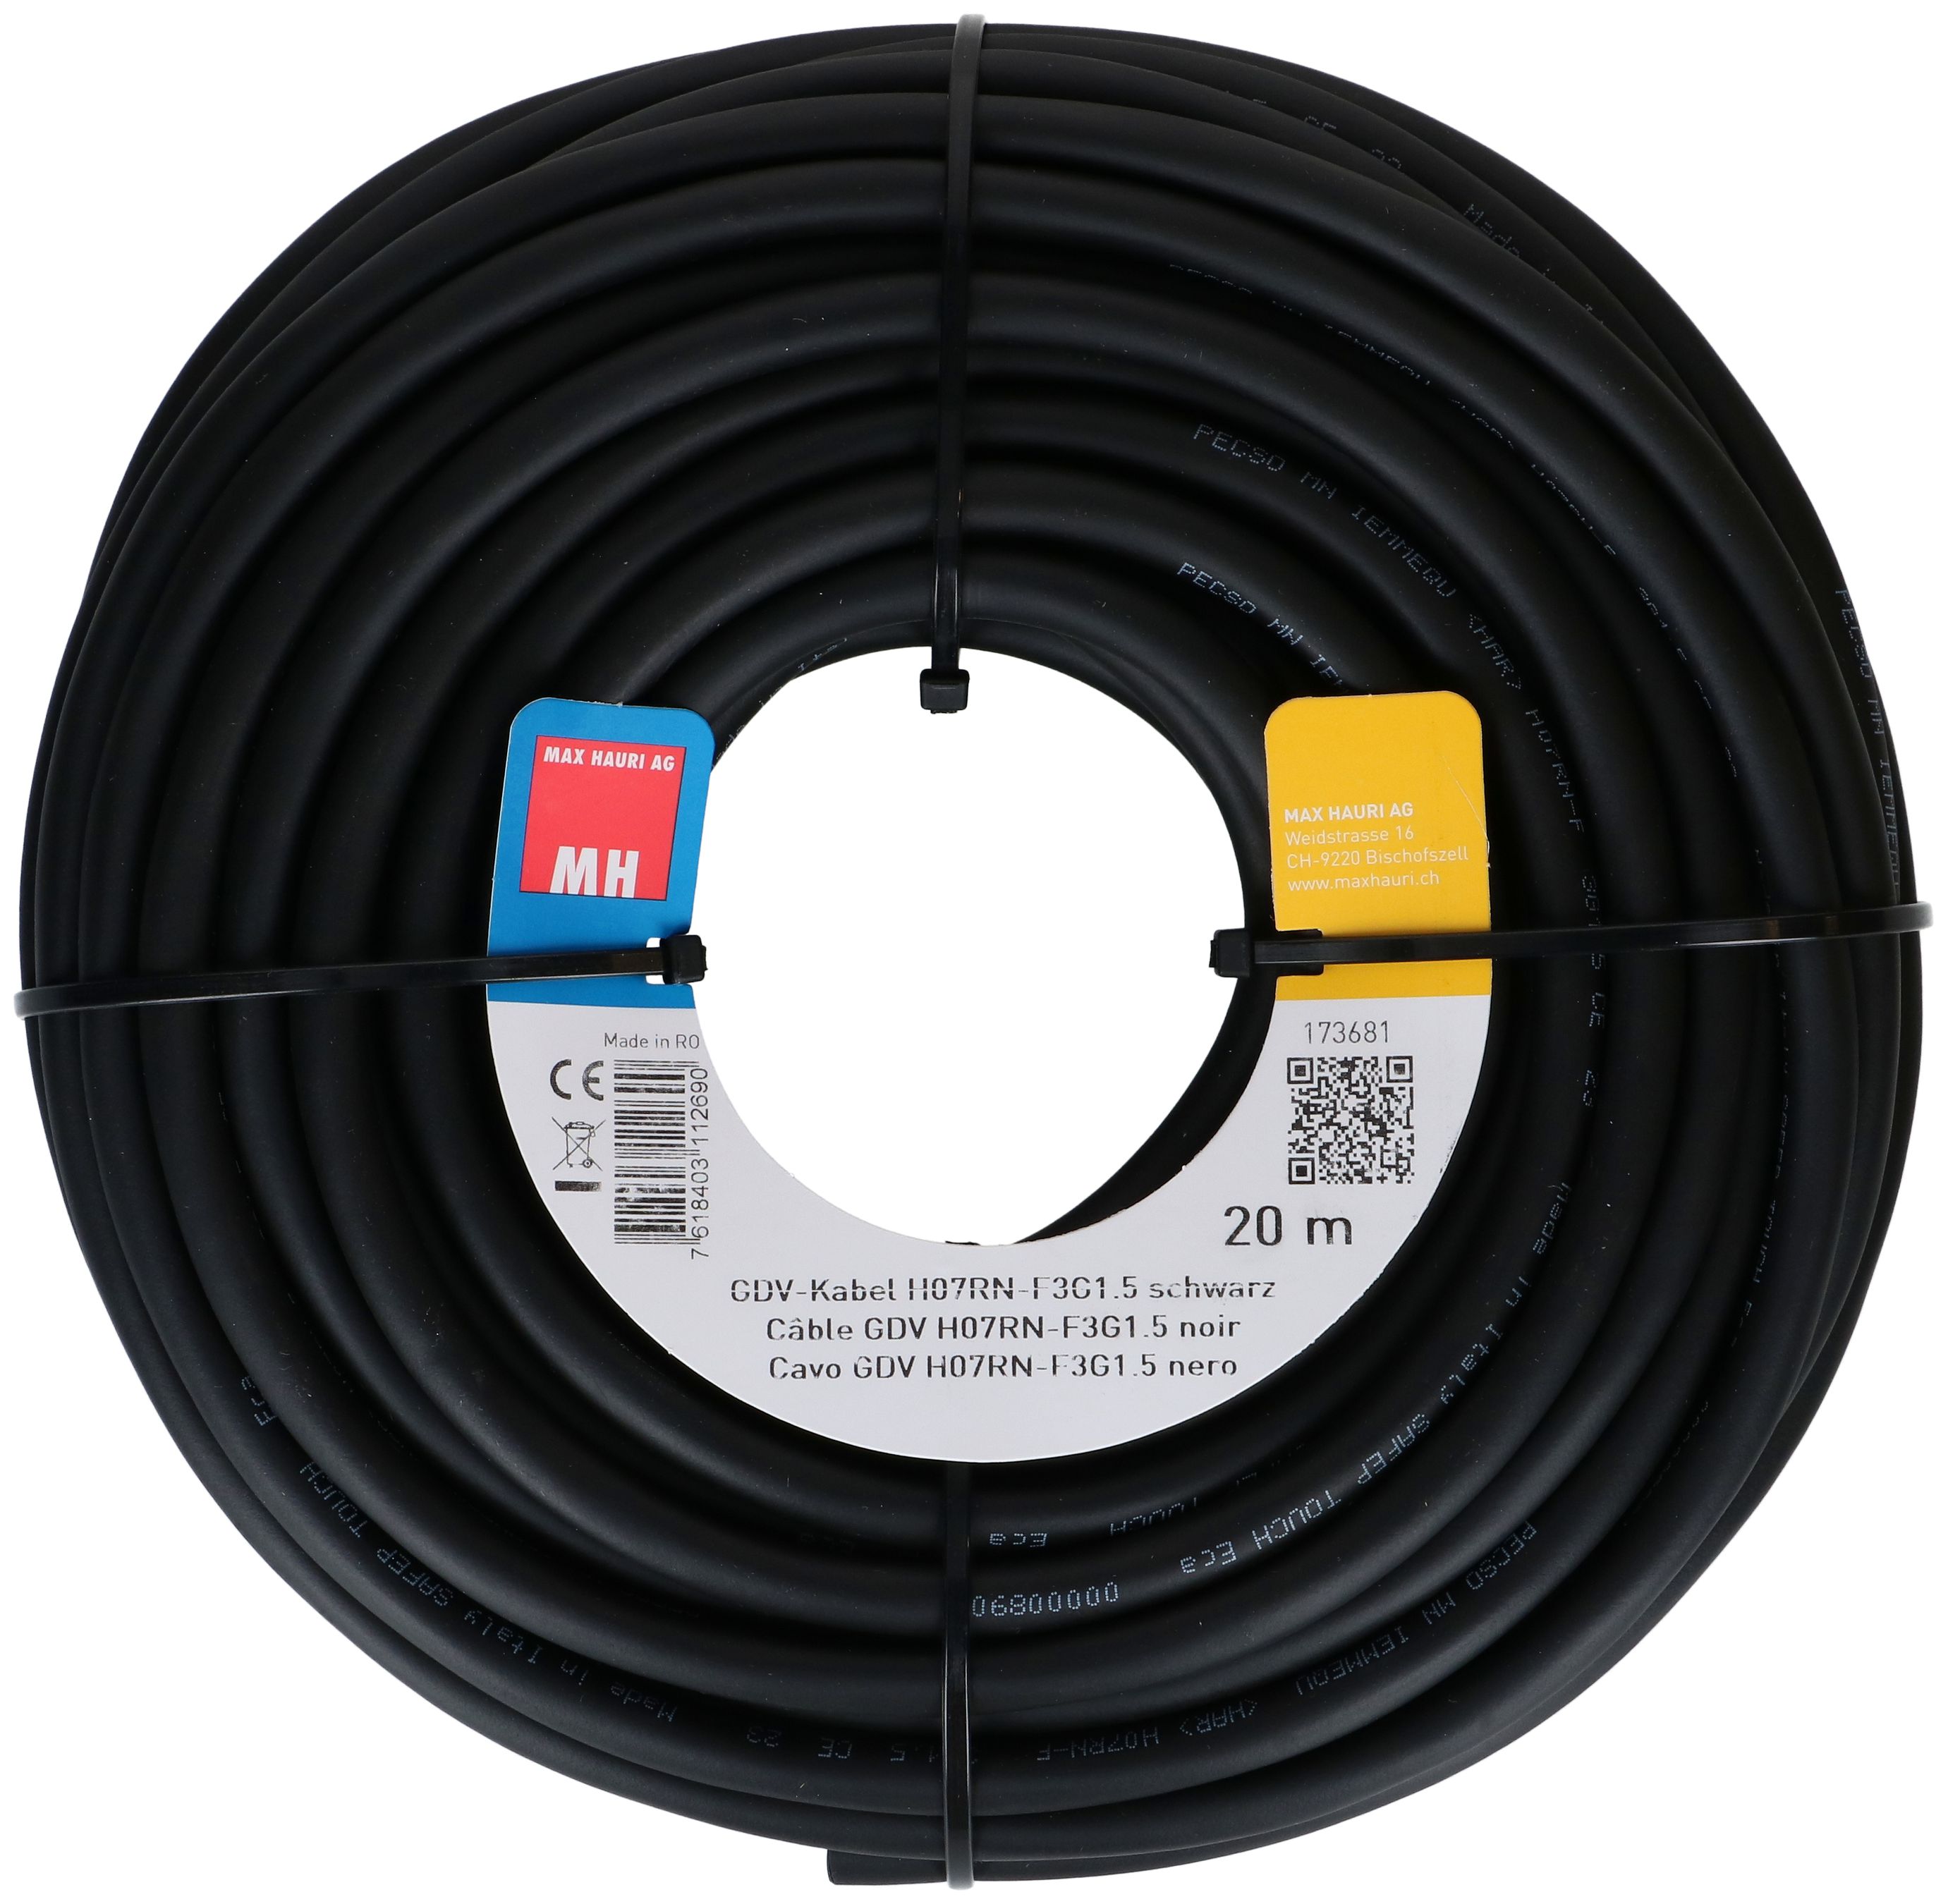 GDV-Kabel H07RN-F3G1.5 20m schwarz